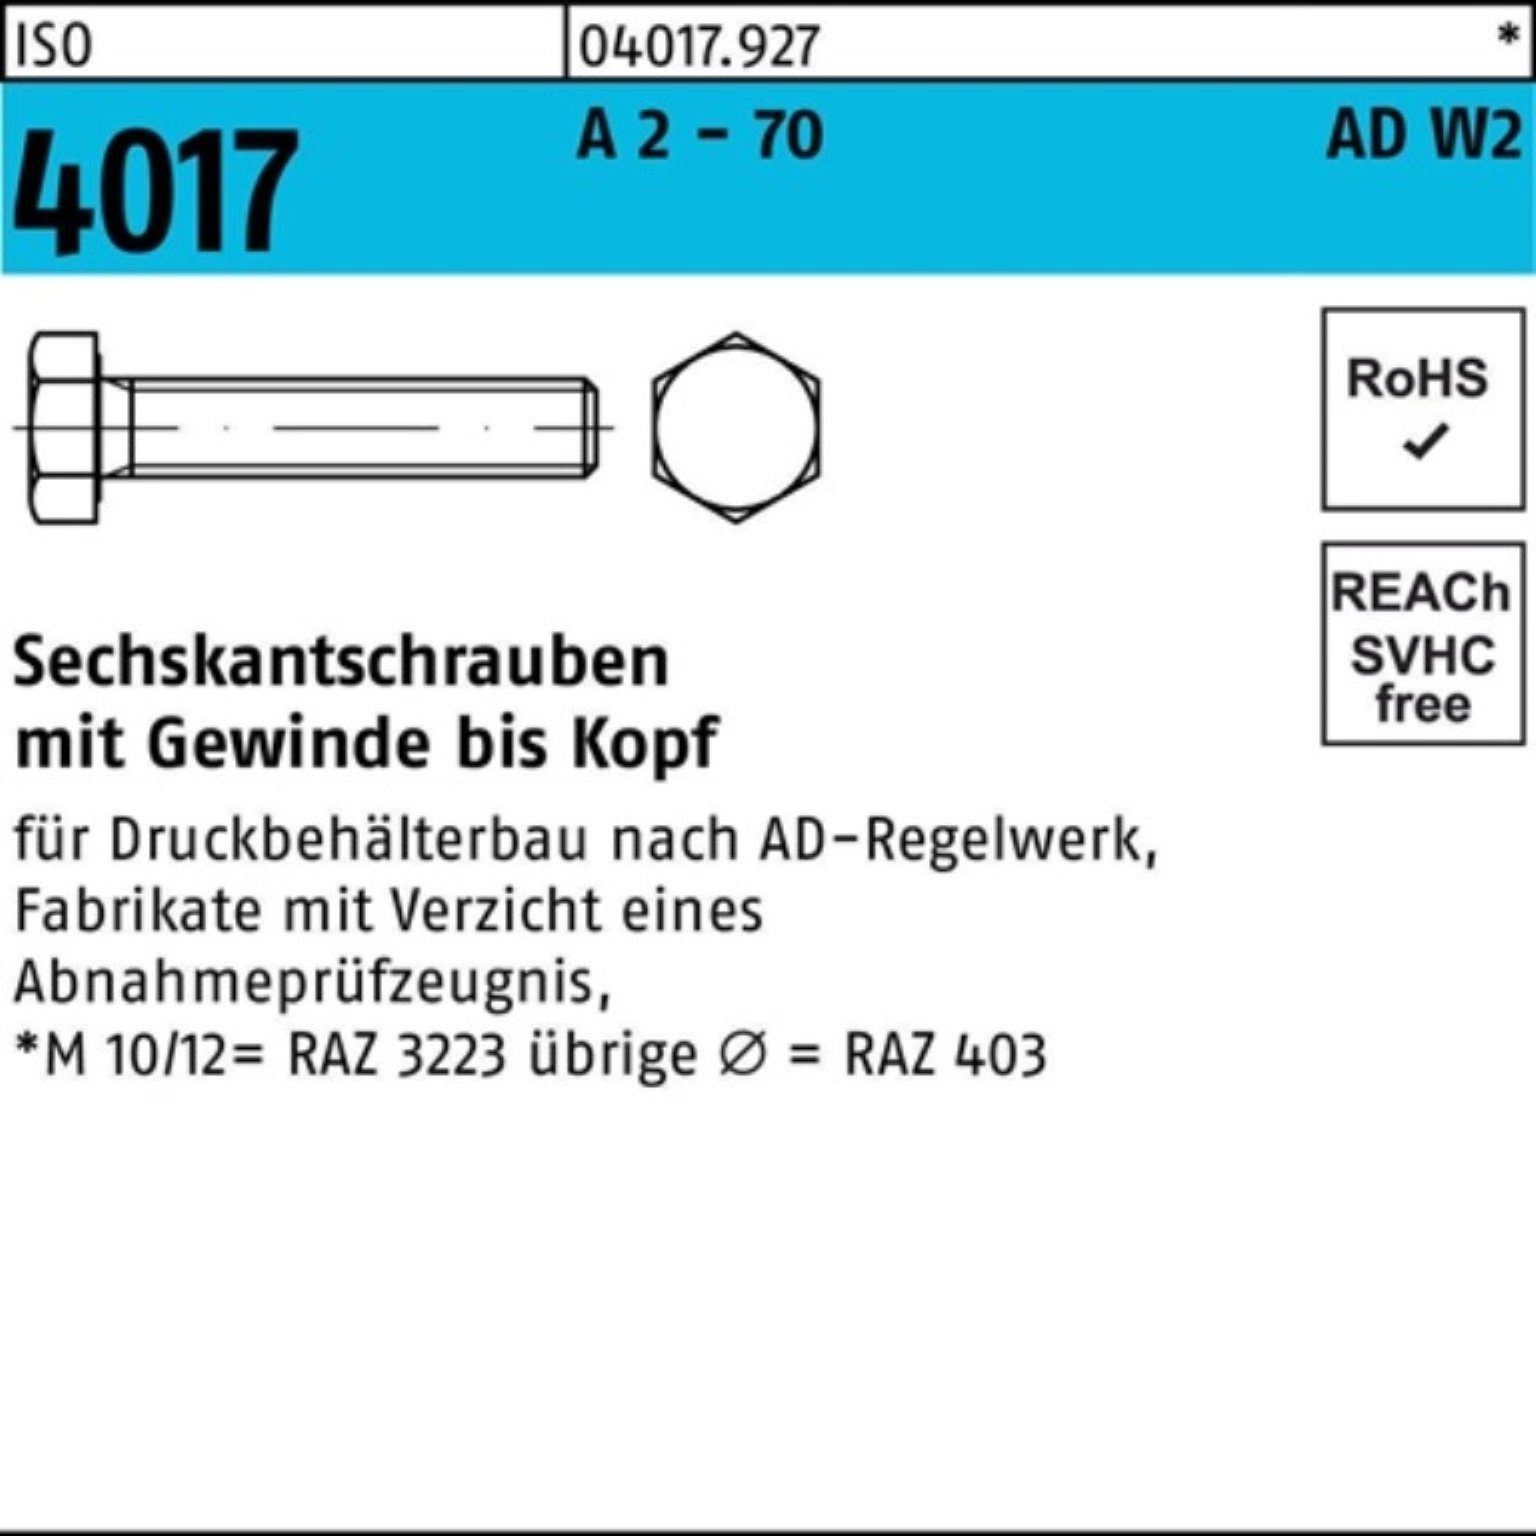 Bufab Sechskantschraube 100er Pack - Sechskantschraube A VG M12x 4017 2 75 25 ISO 70 St AD-W2